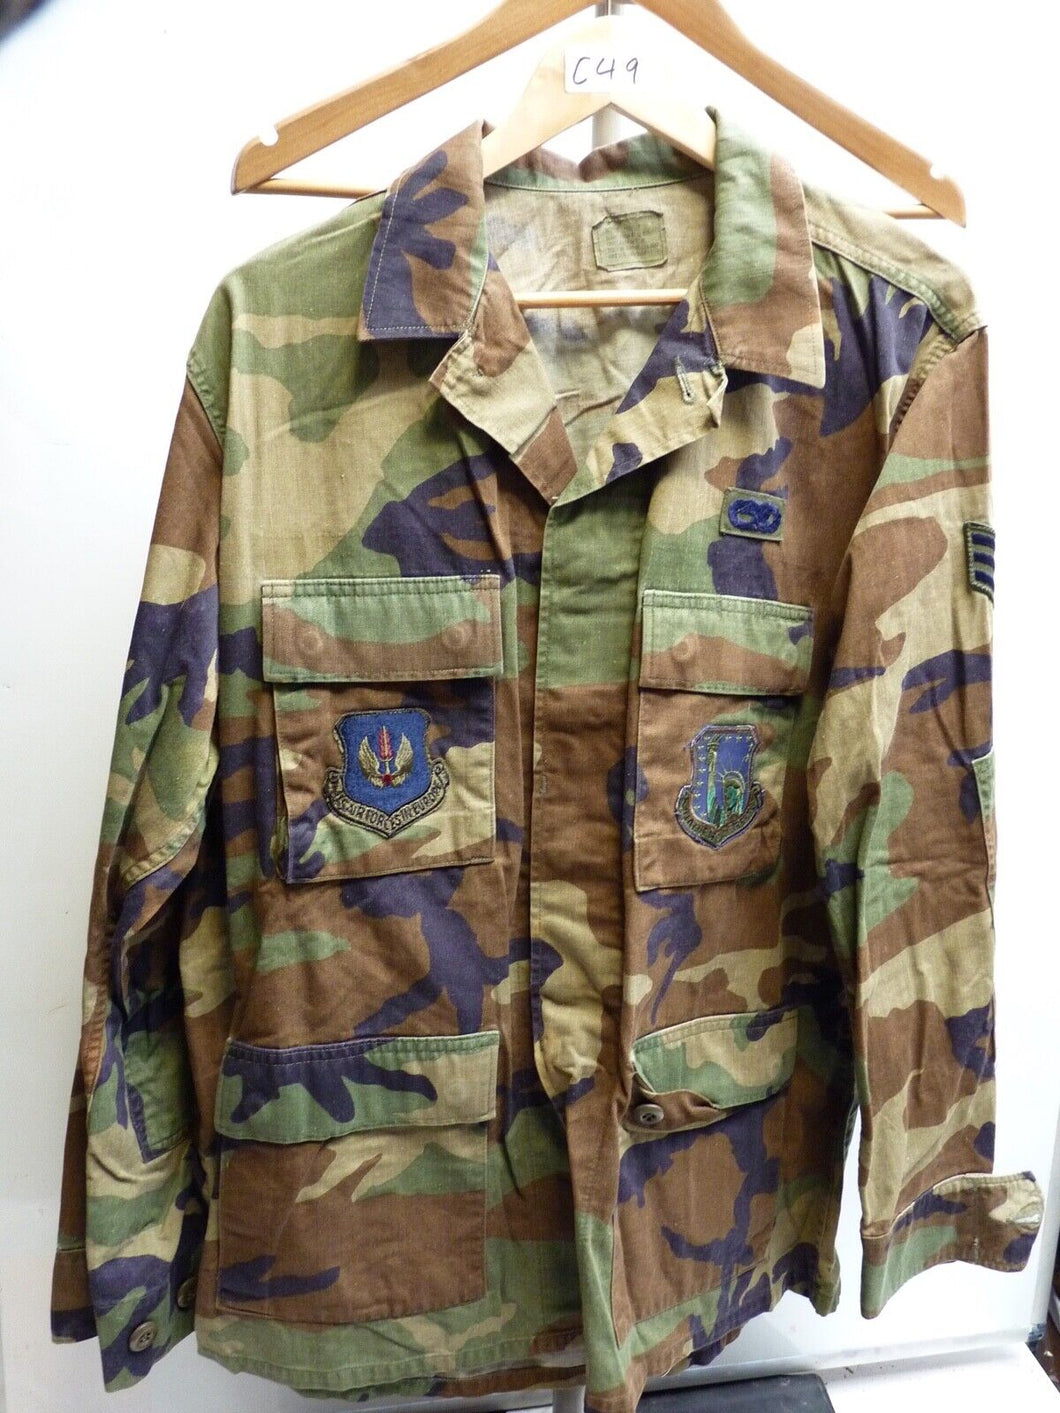 Genuine US Army Camouflaged BDU Battledress Badged Uniform - 37 to 41 Inch Chest